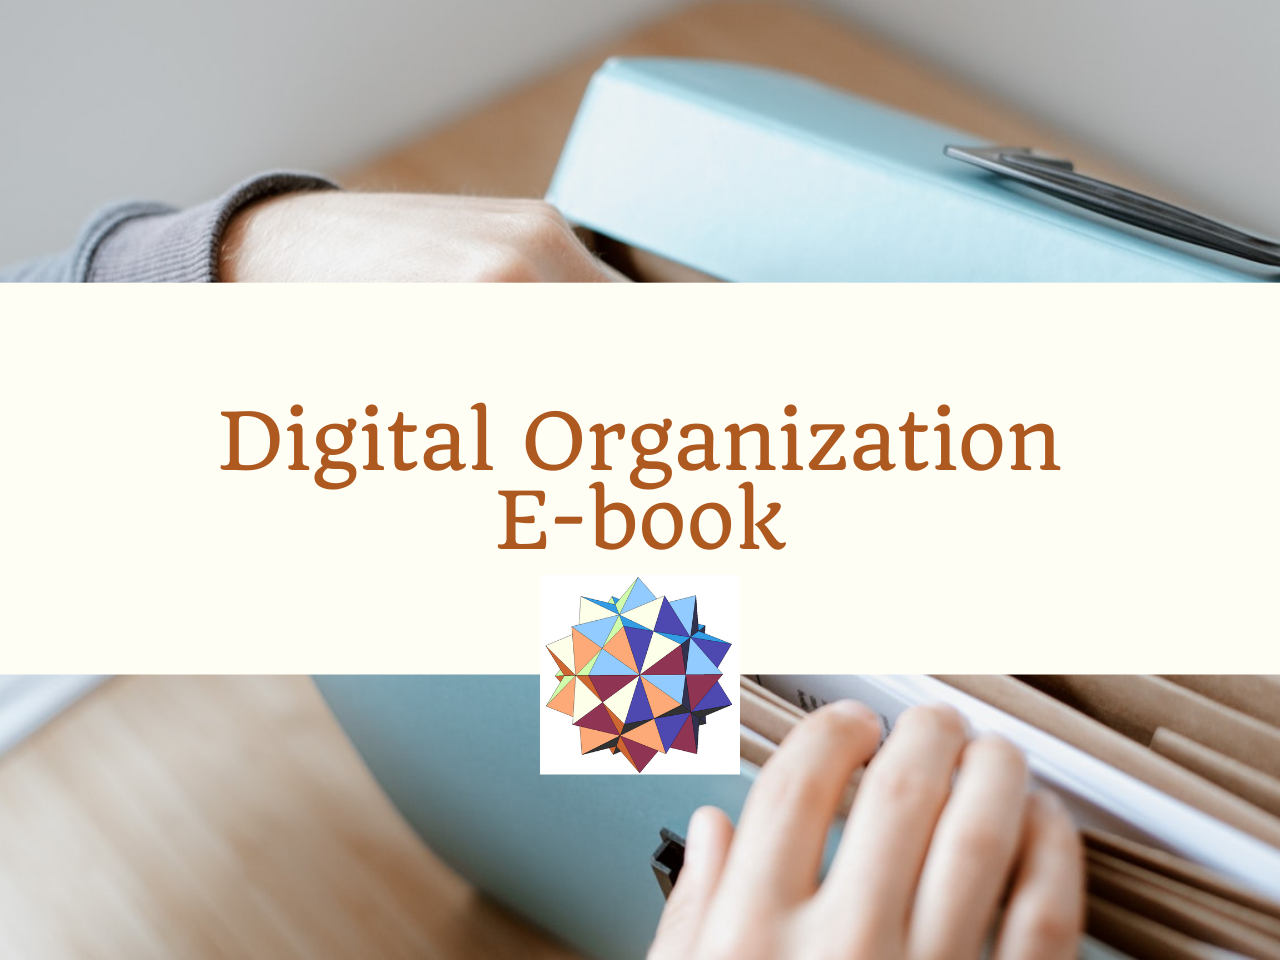 Digital Organization E-book cover